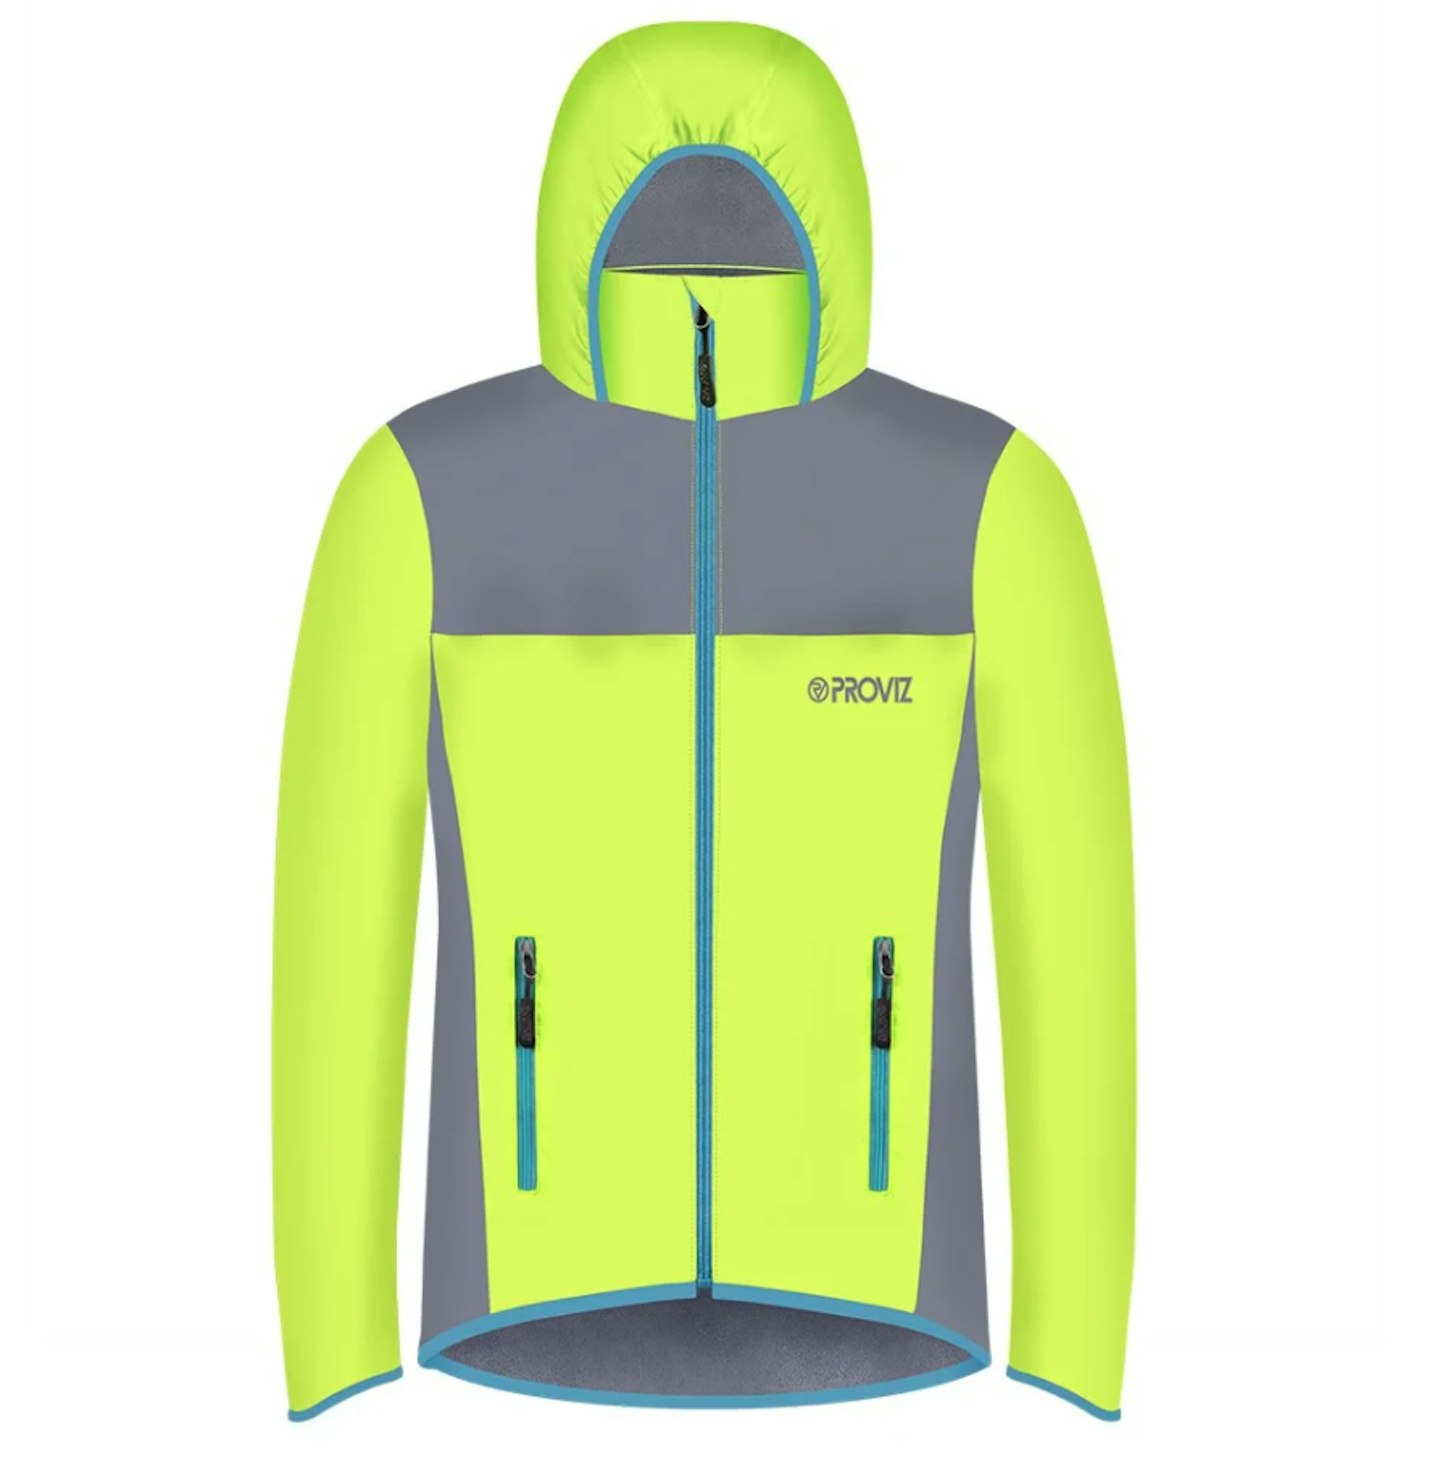 Nightrider Kids' Fleece-Lined Waterproof Jacket 